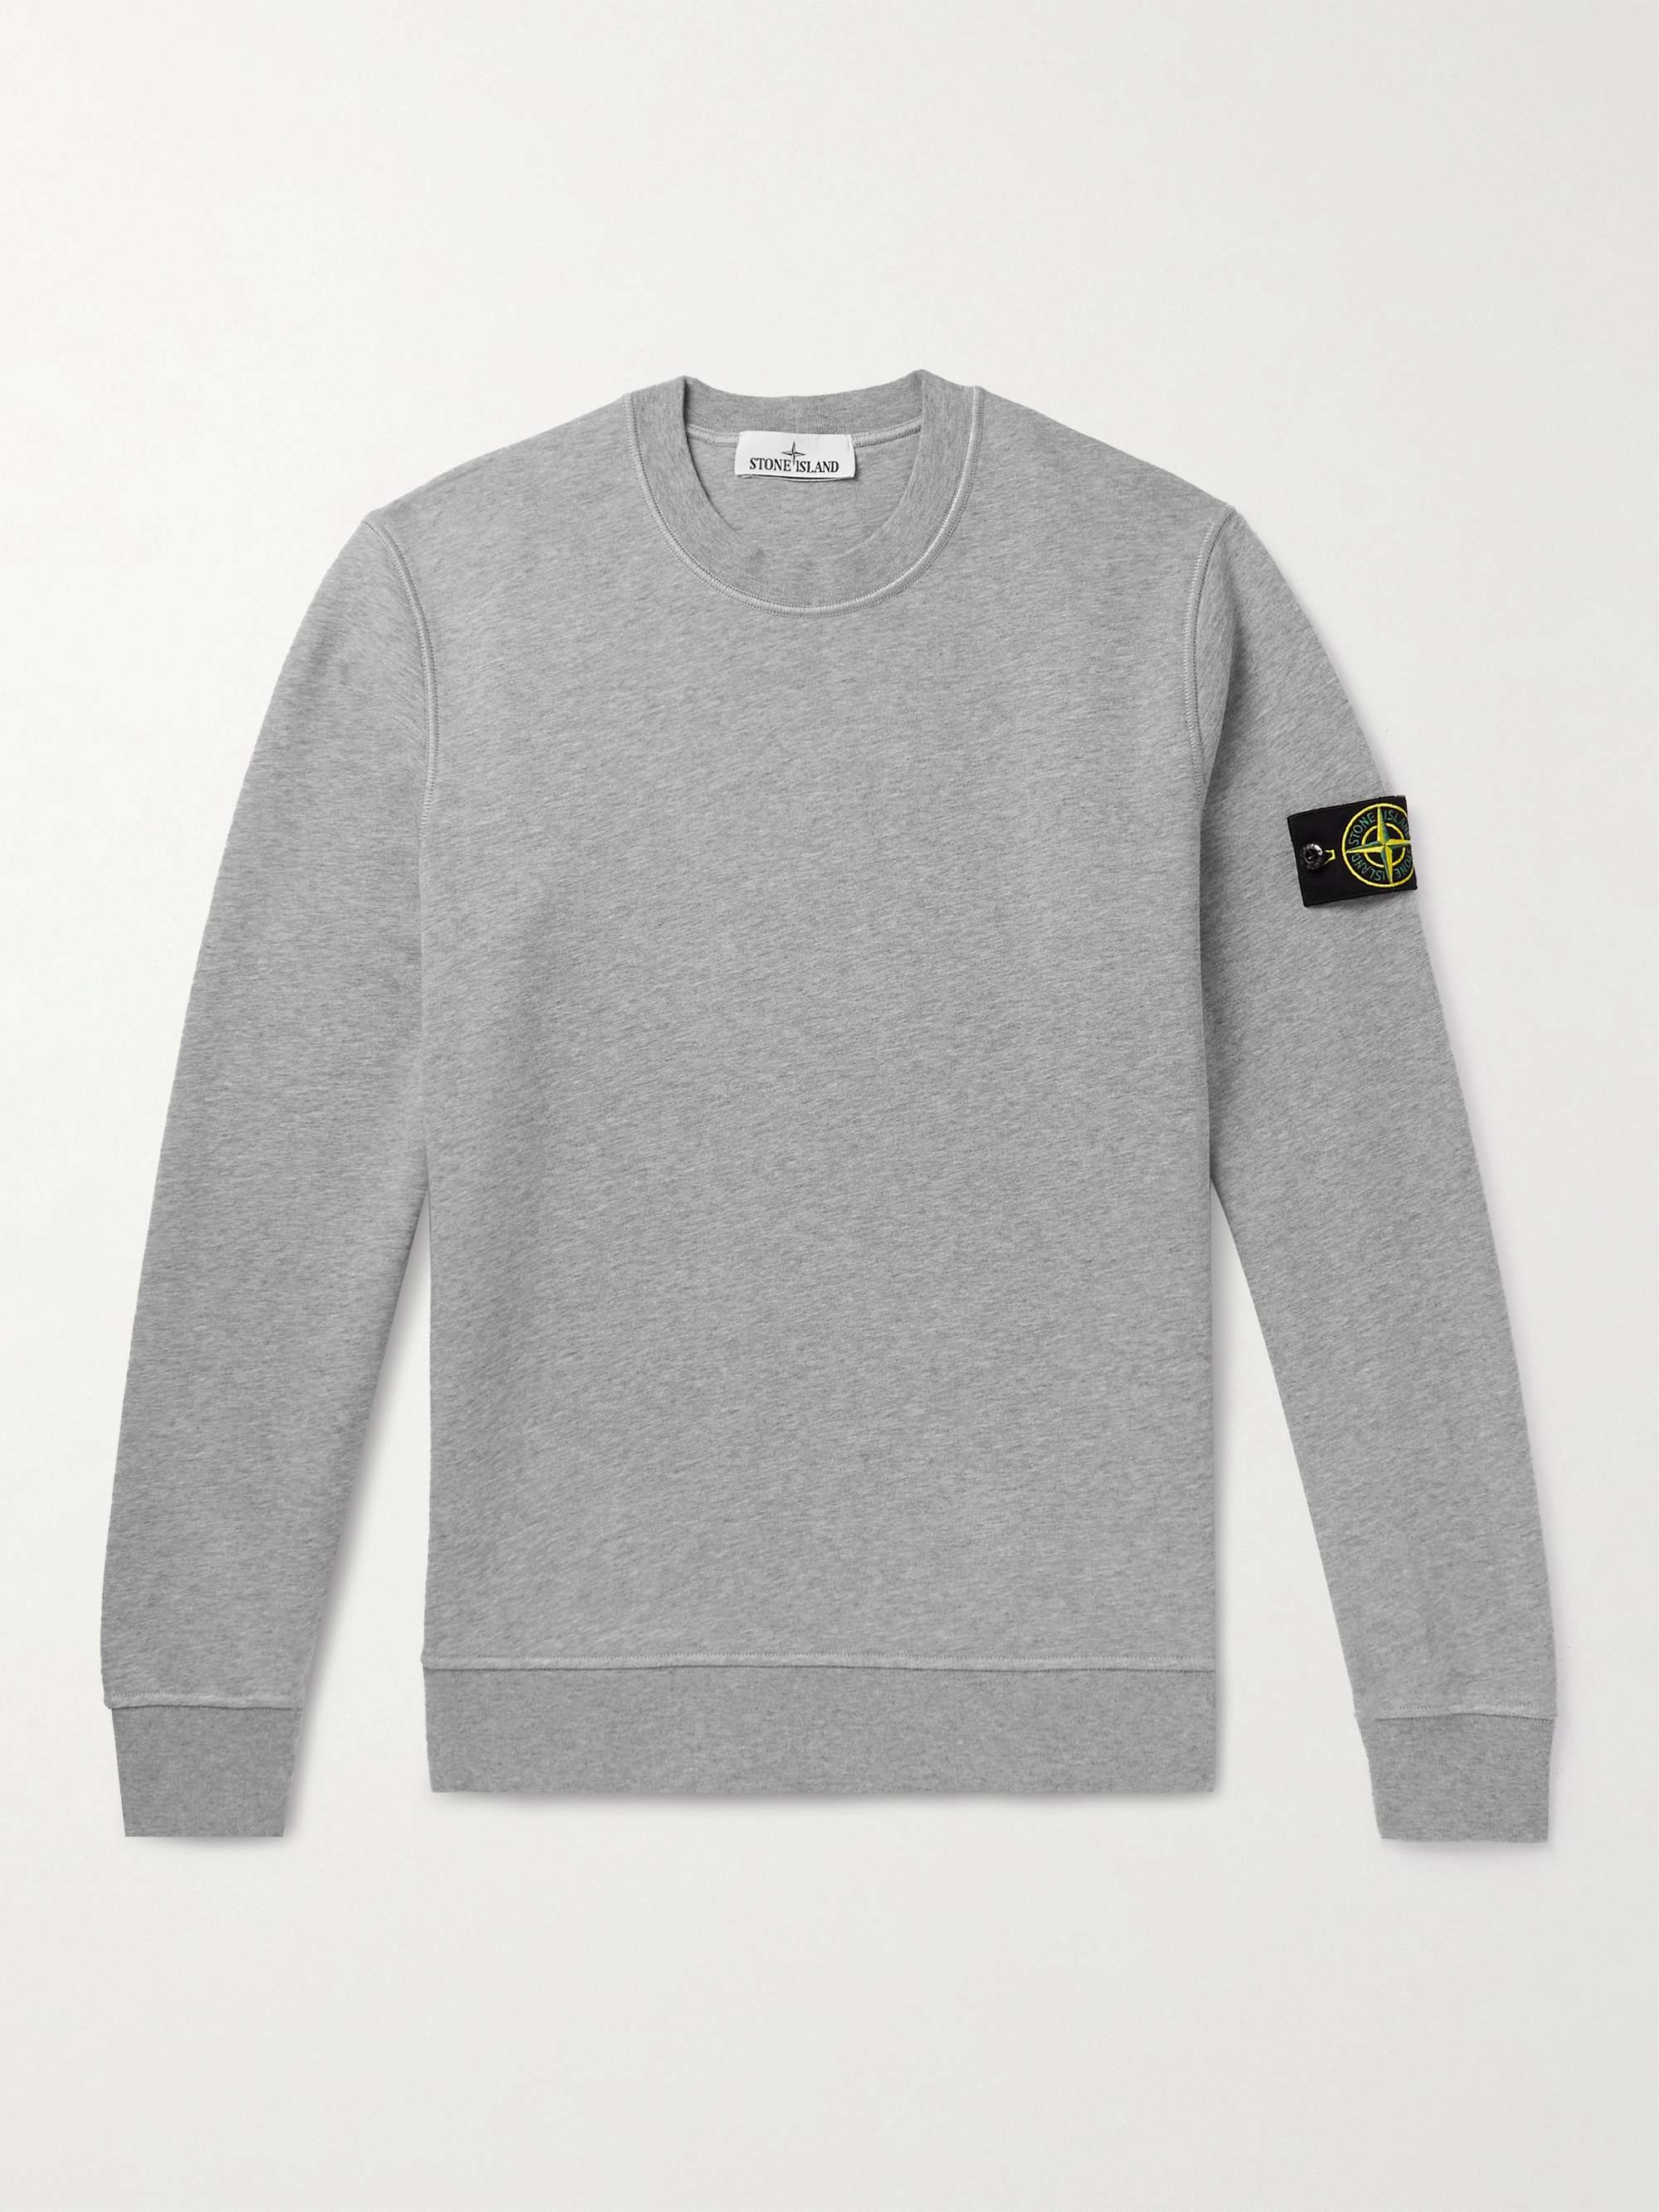 STONE ISLAND Logo-Appliqued Garment-Dyed Cotton-Jersey Sweatshirt,Gray